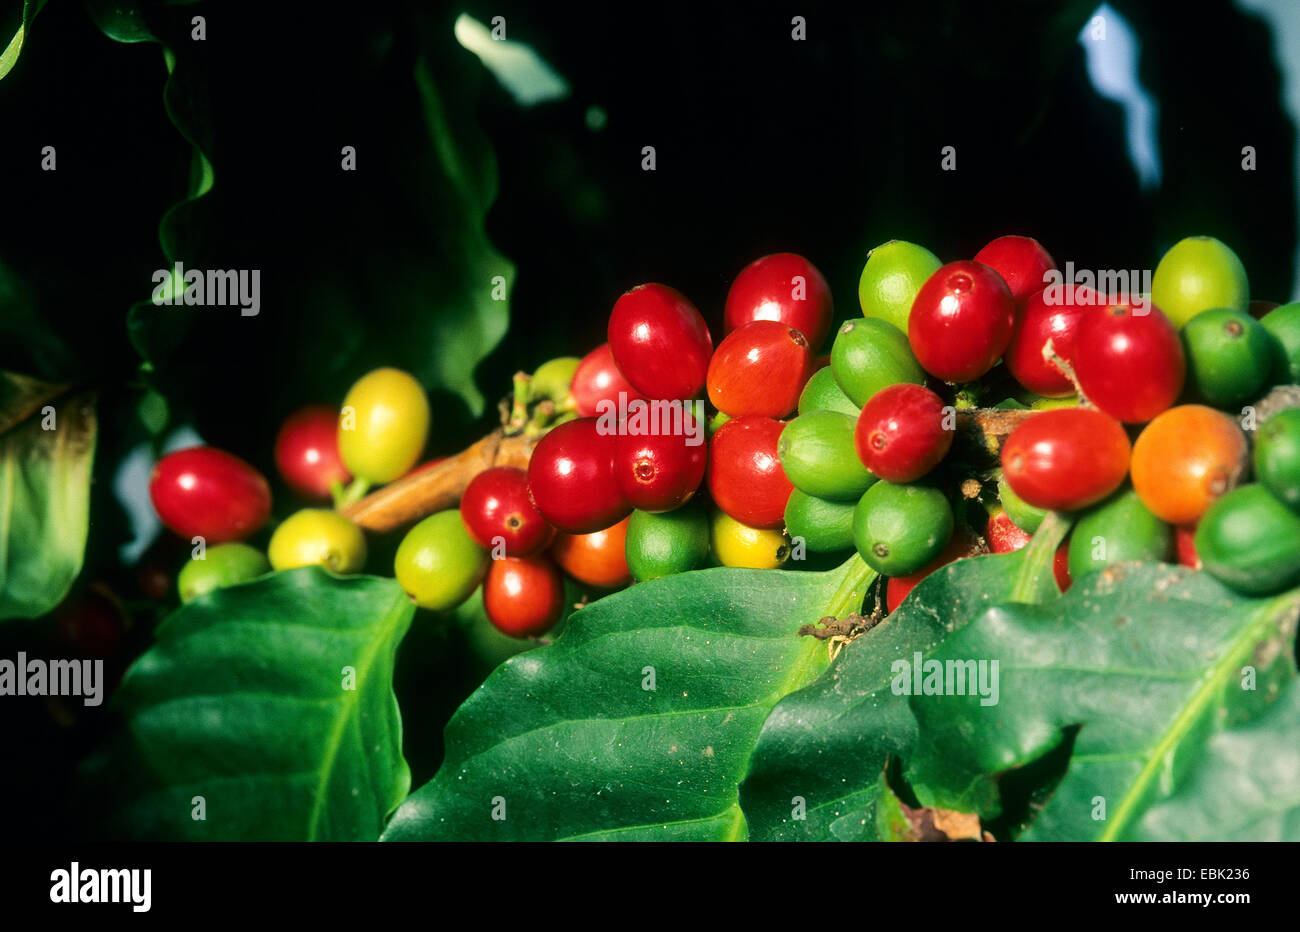 Arabian coffee (Coffea arabica), branch with fruits Stock Photo